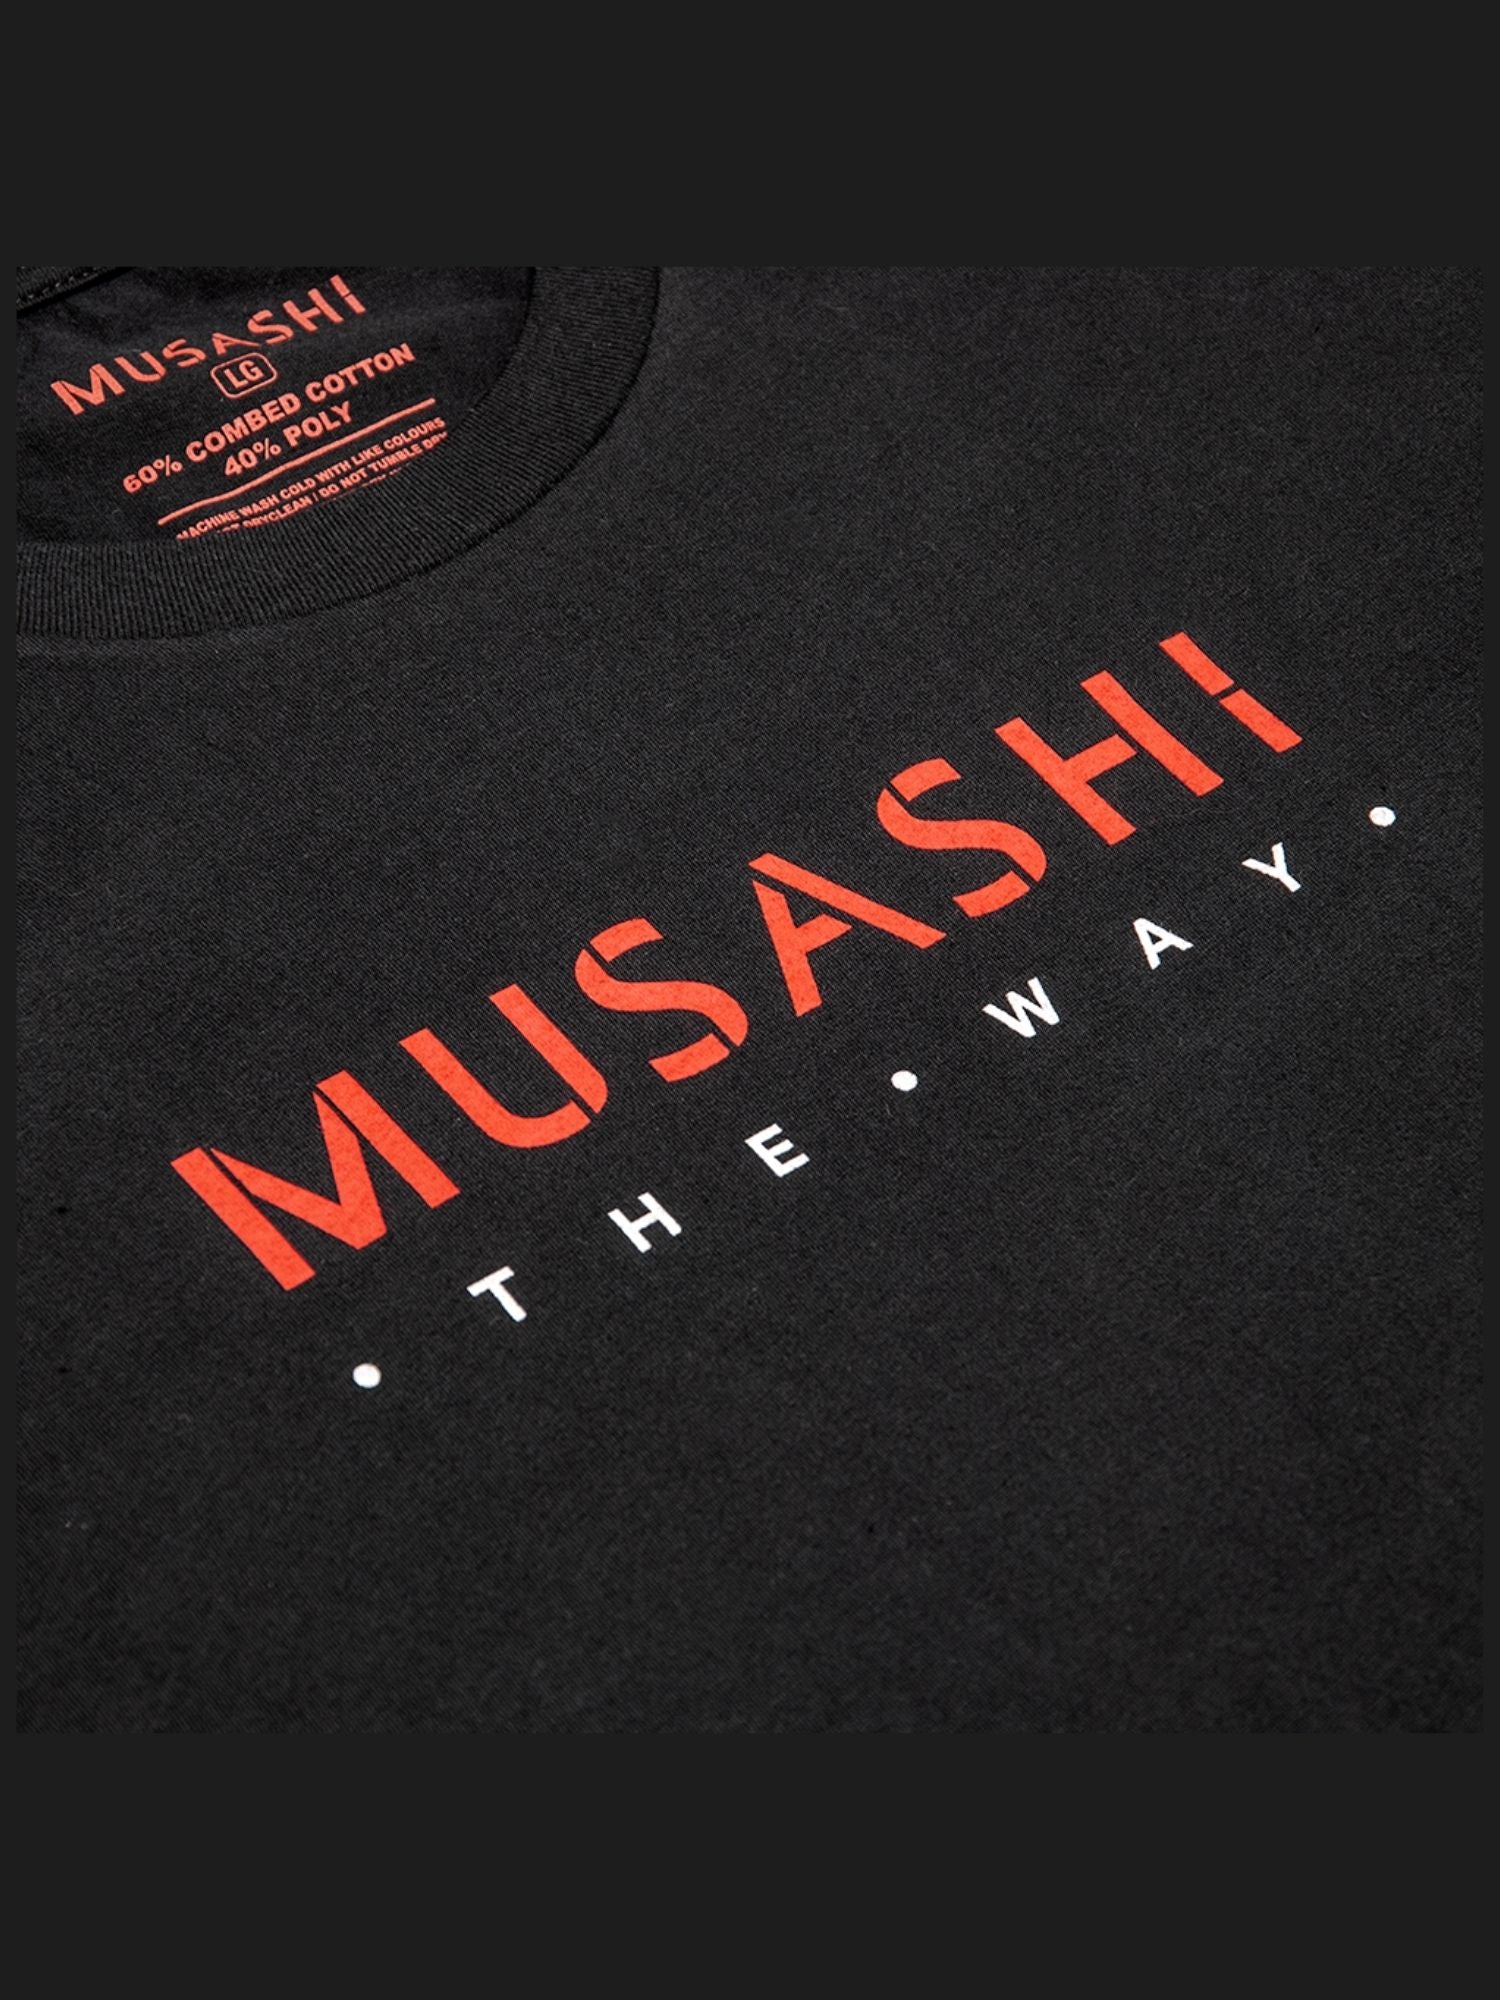 Musash-United-Premium-T-Shirt-M